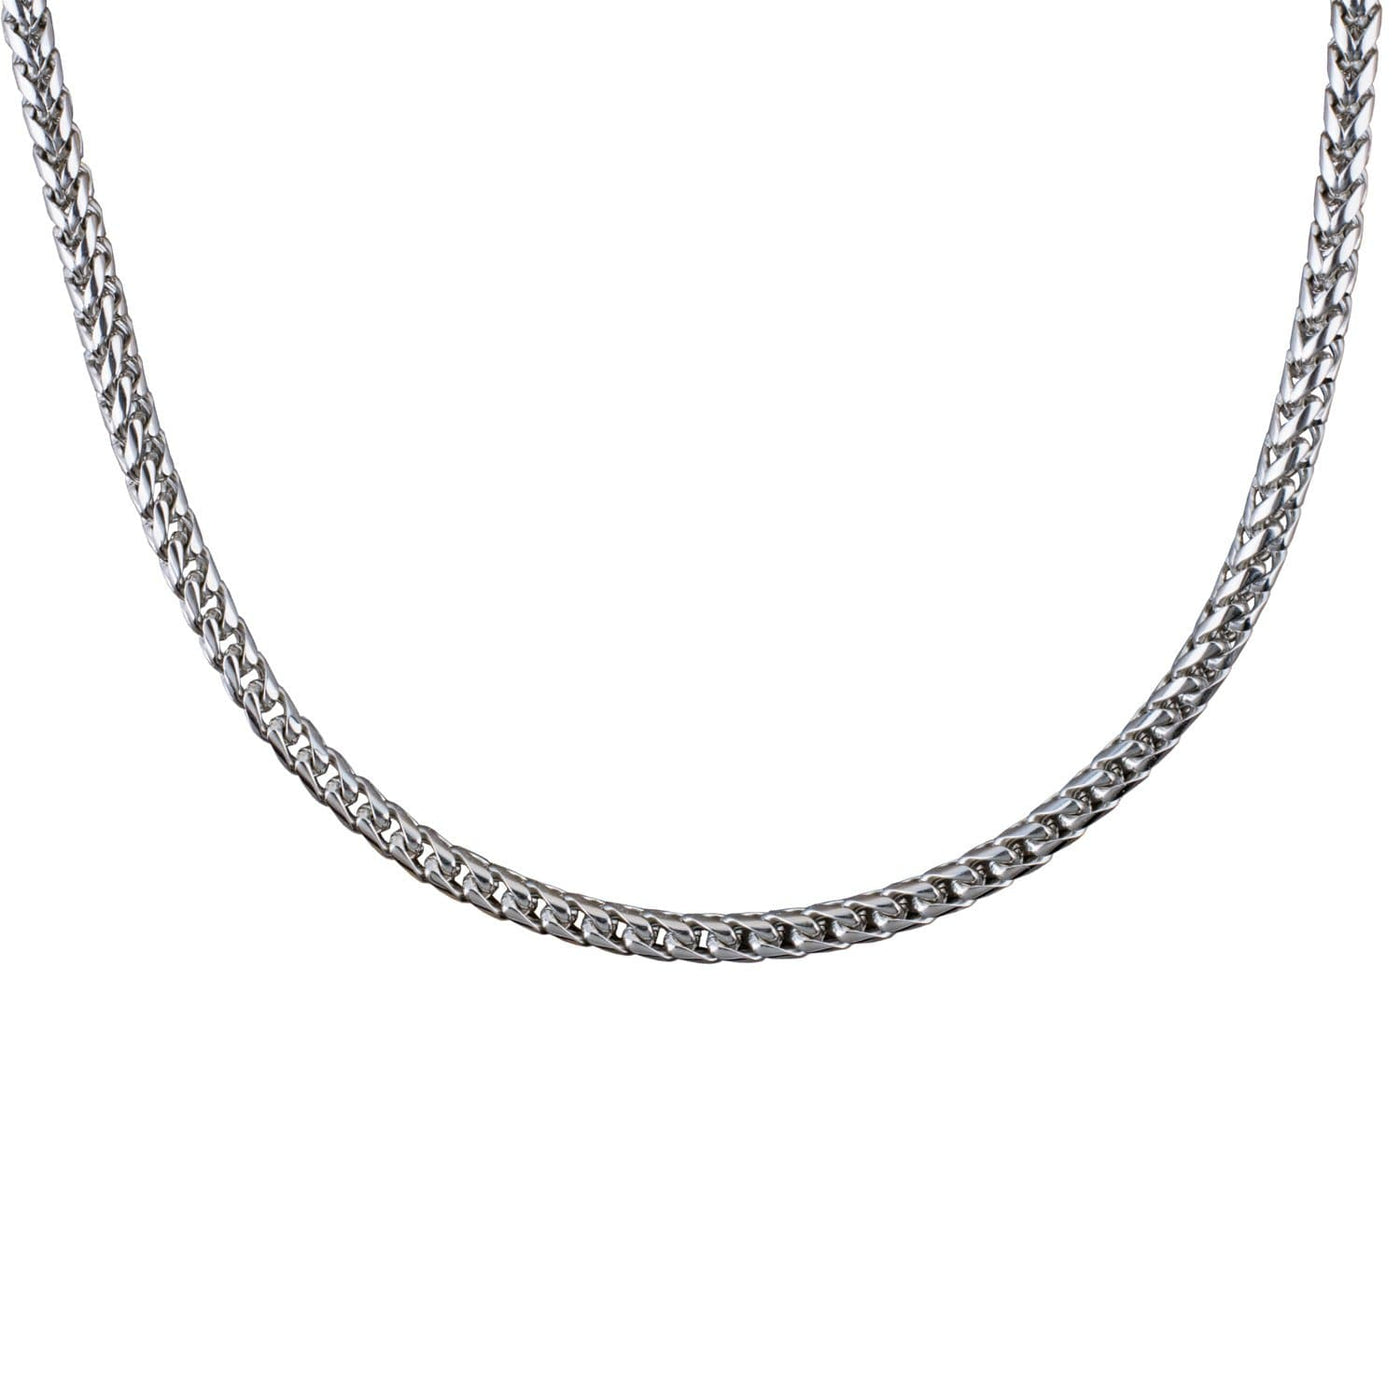 Daniel Steiger Magnitude Steel Necklace